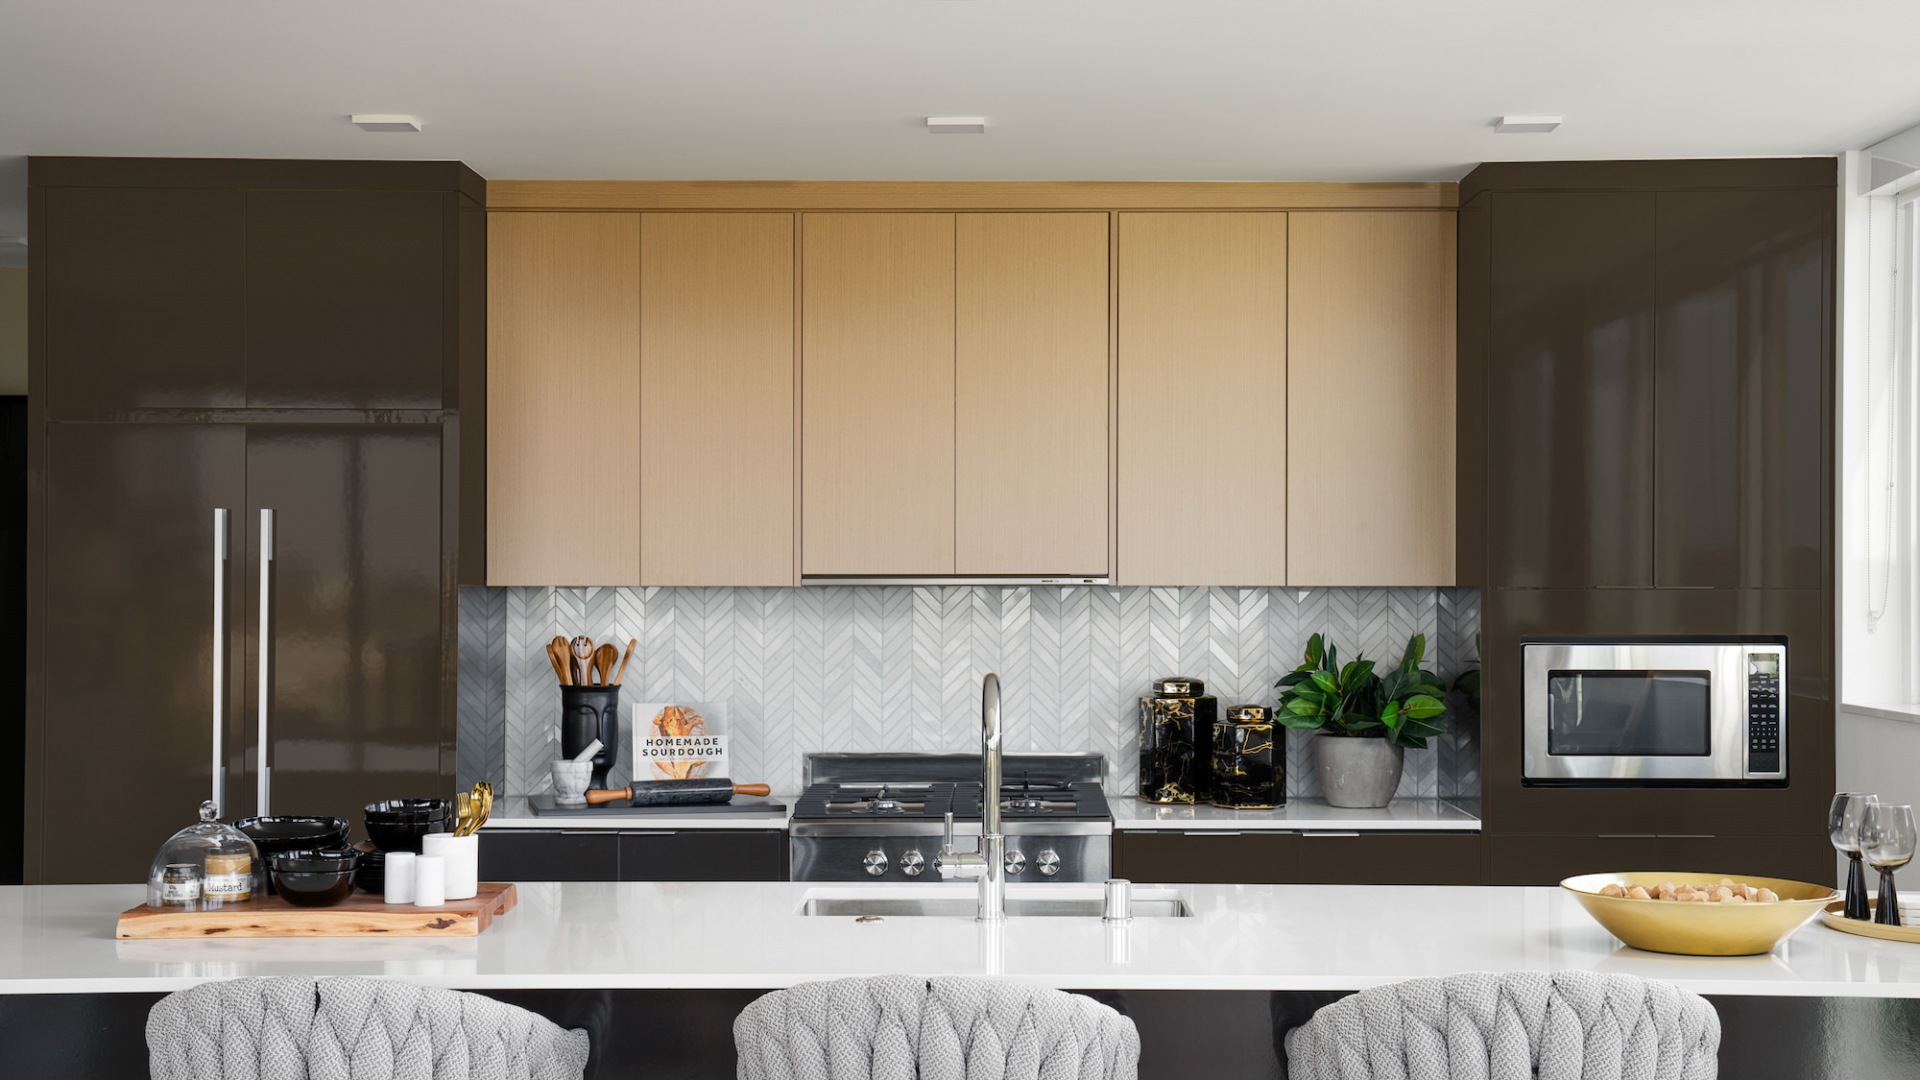 Kitchen with quartz countertops, backsplash and modern finishes